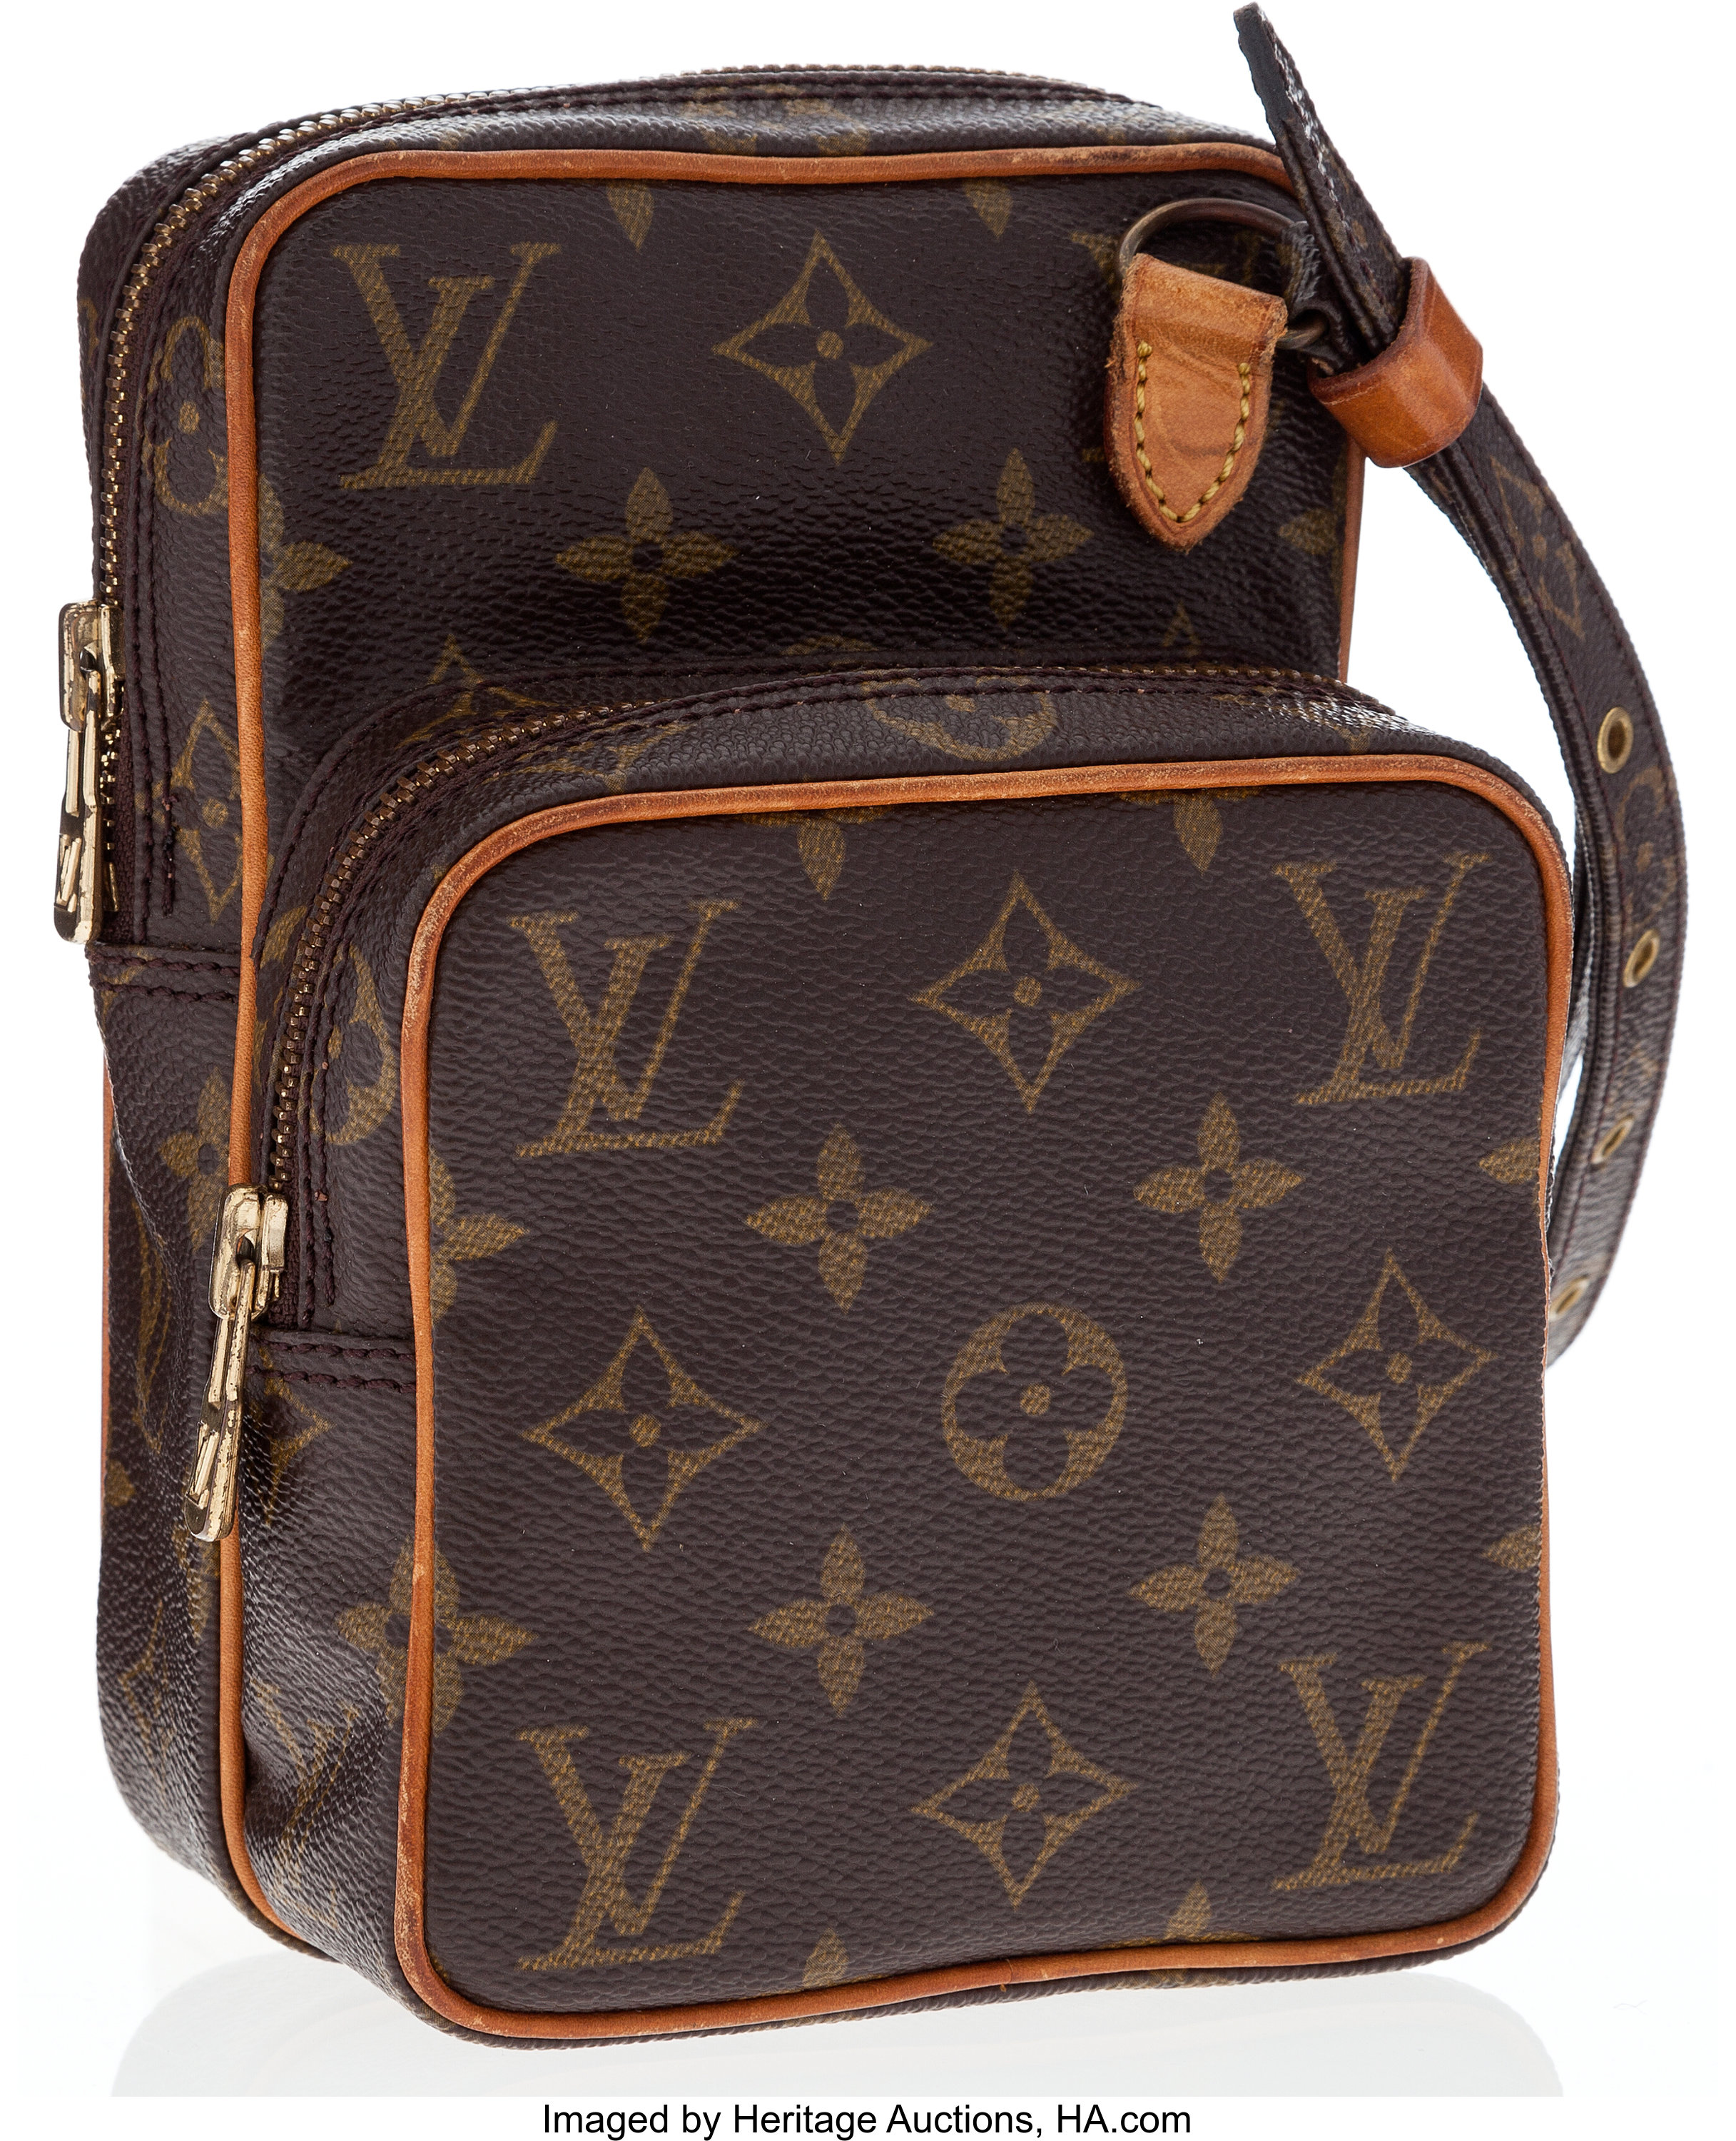 Sold at Auction: VINTAGE LOUIS VUITTON TILSITT EPI LEATHER SHOULDER  CROSSBODY BAG